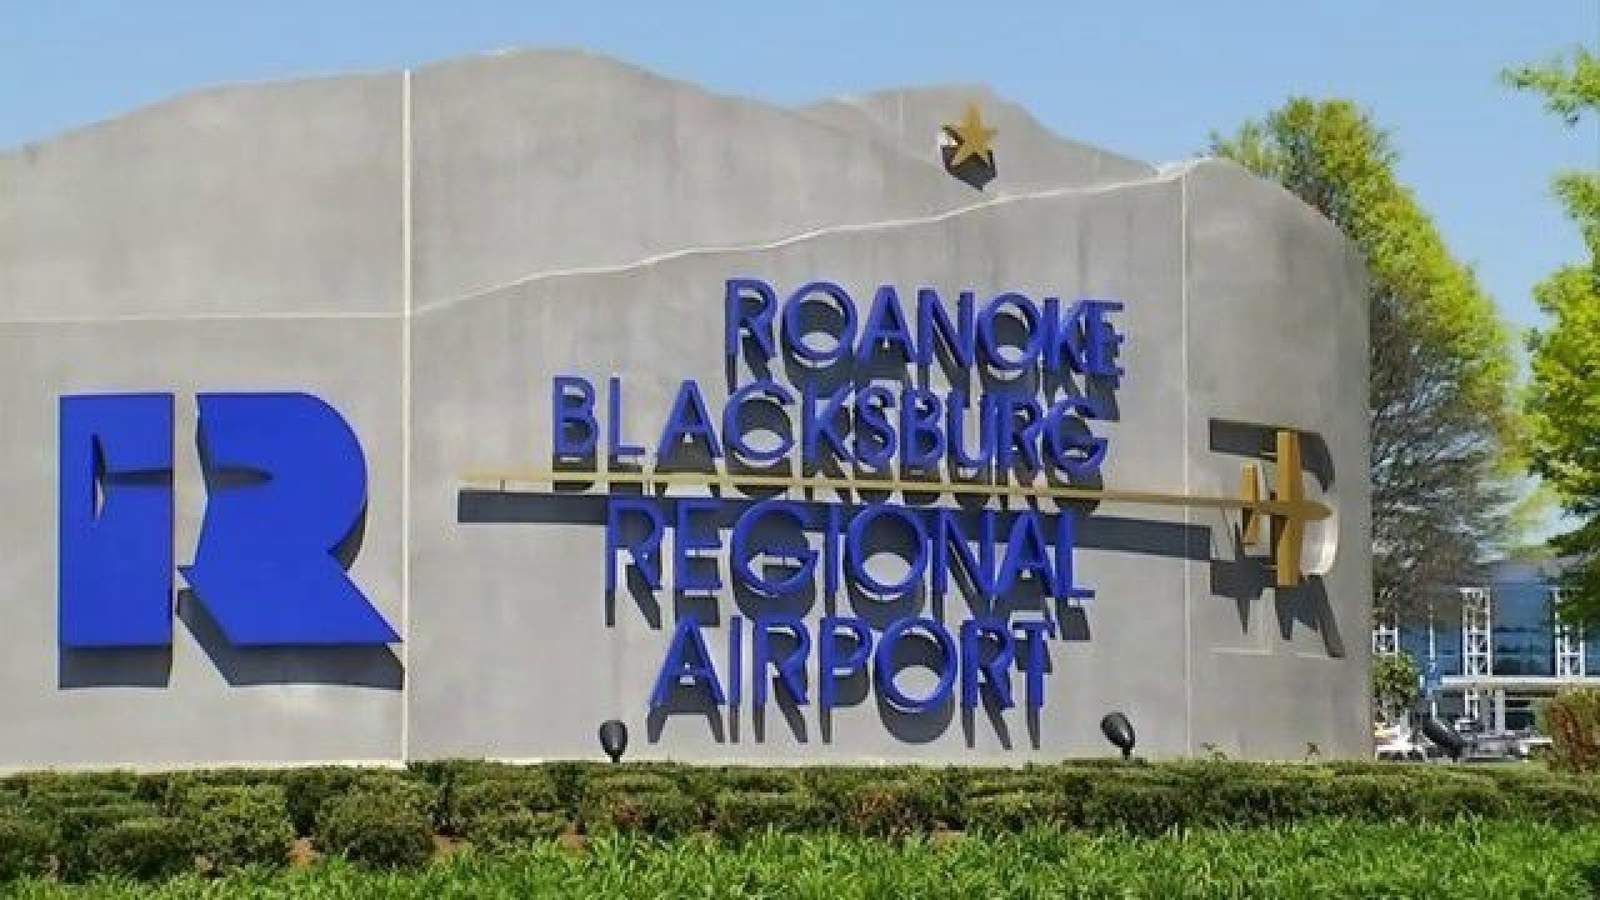 Passengers evacuated after smoke found in plane cockpit at Roanoke-Blacksburg Regional Airport